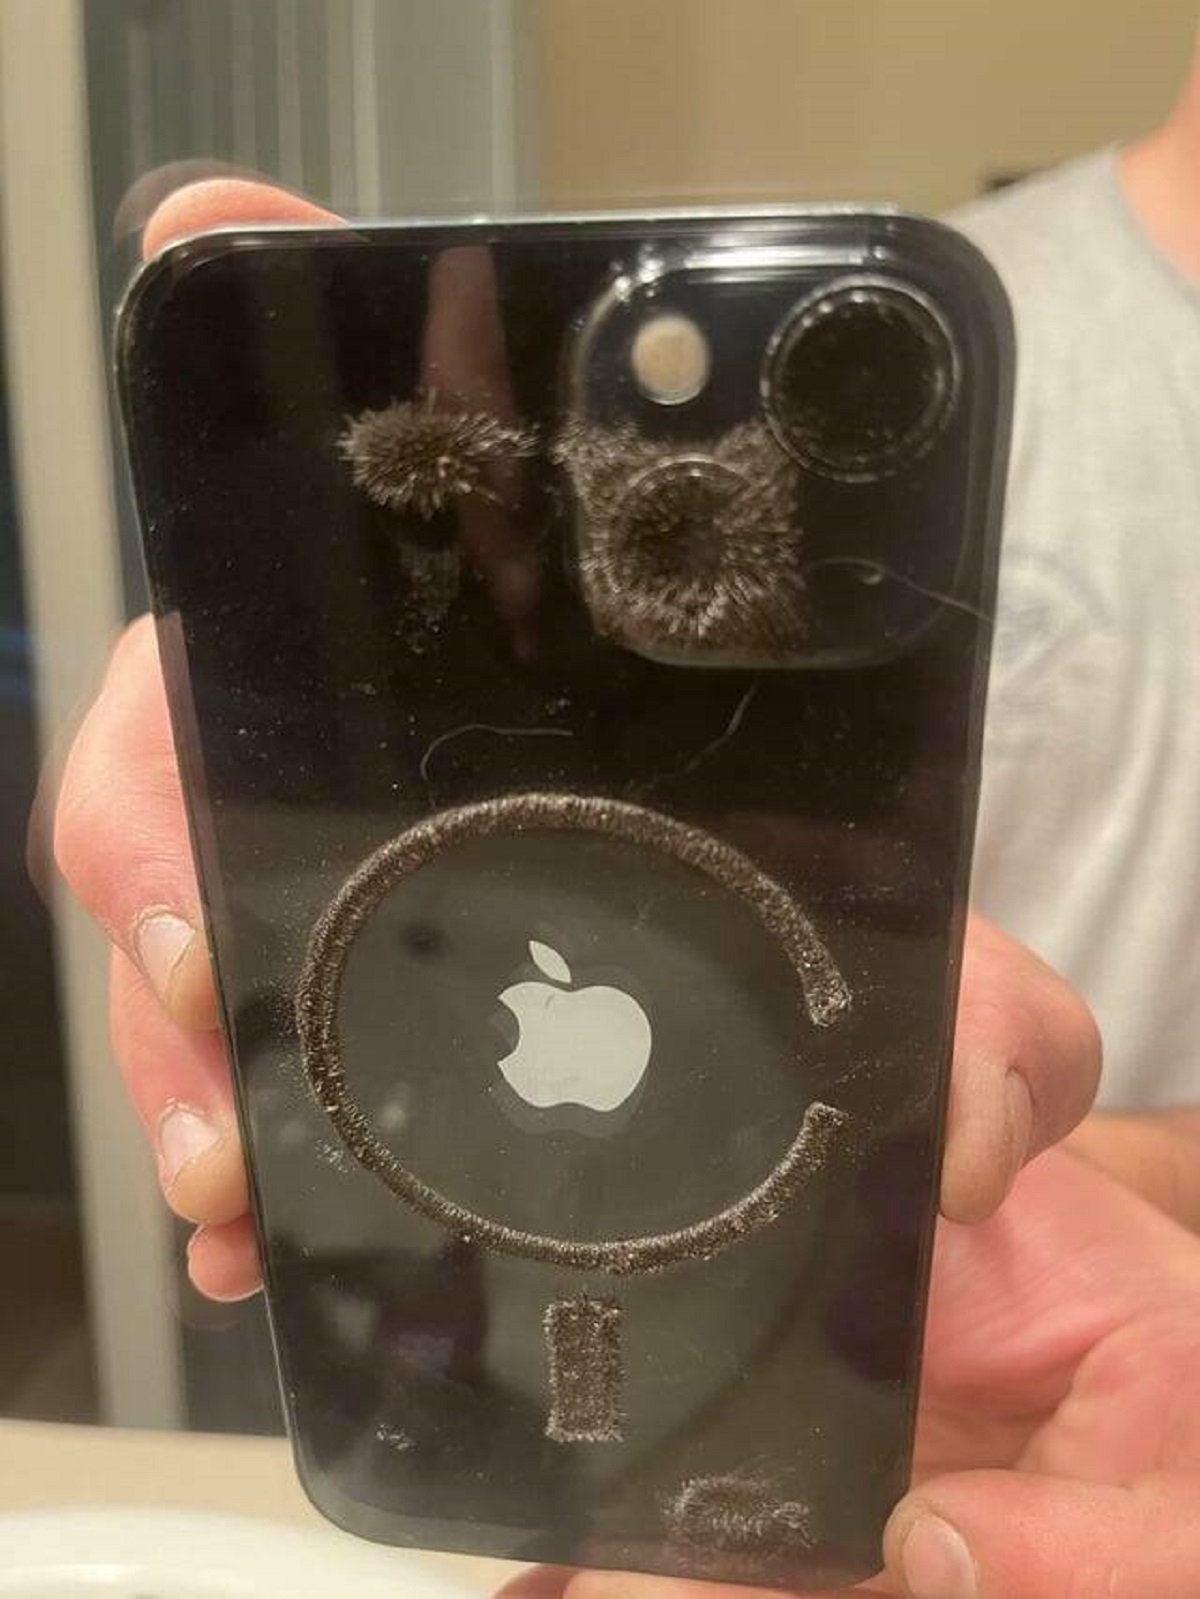 "Metal shavings identify magnets in iPhone"